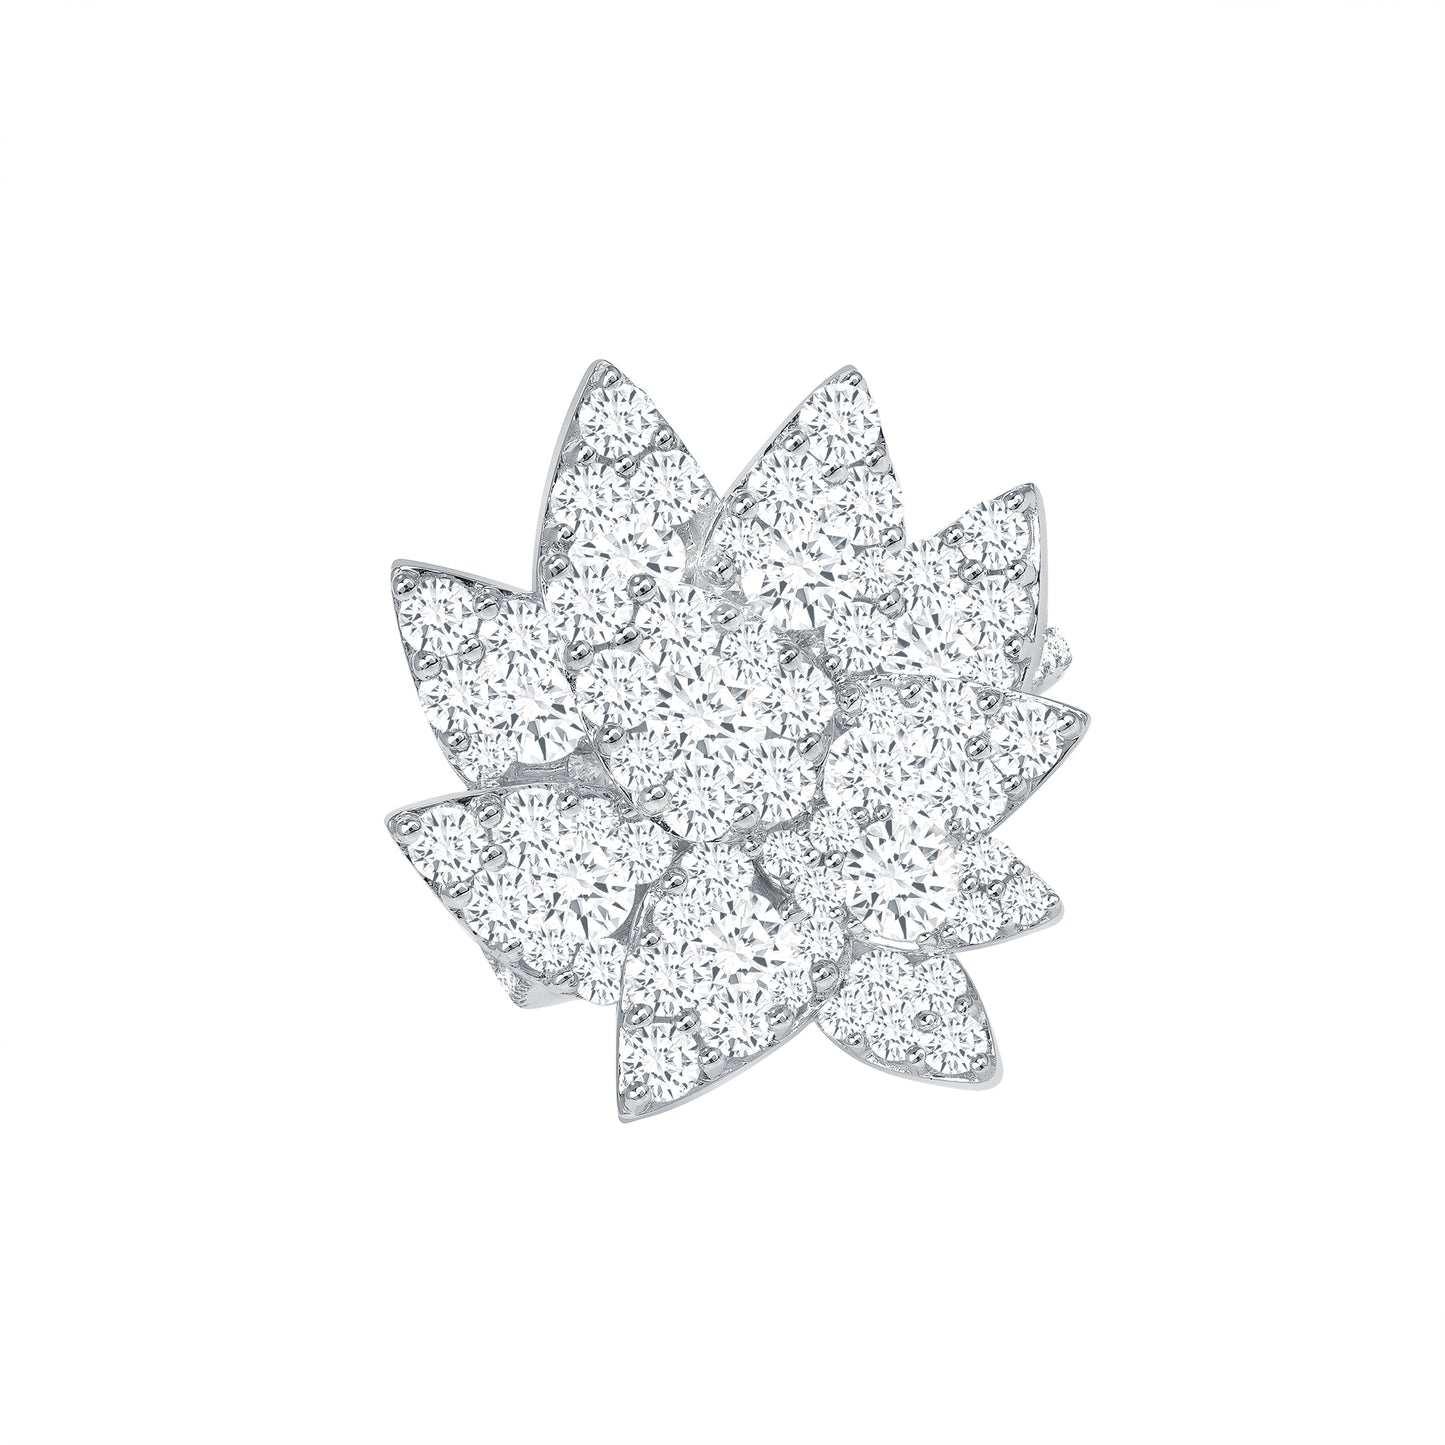 Lotus Flower Diamond Cocktail Ring